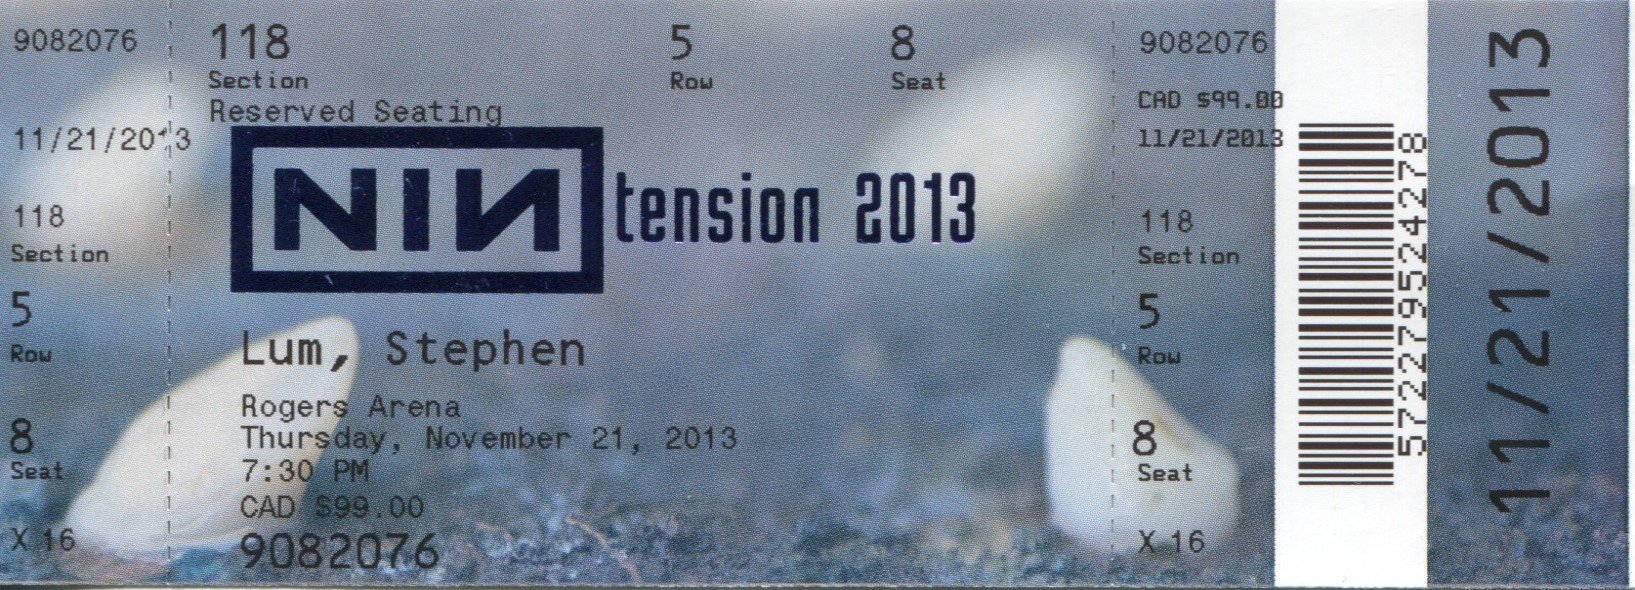 2013/11/21 Ticket